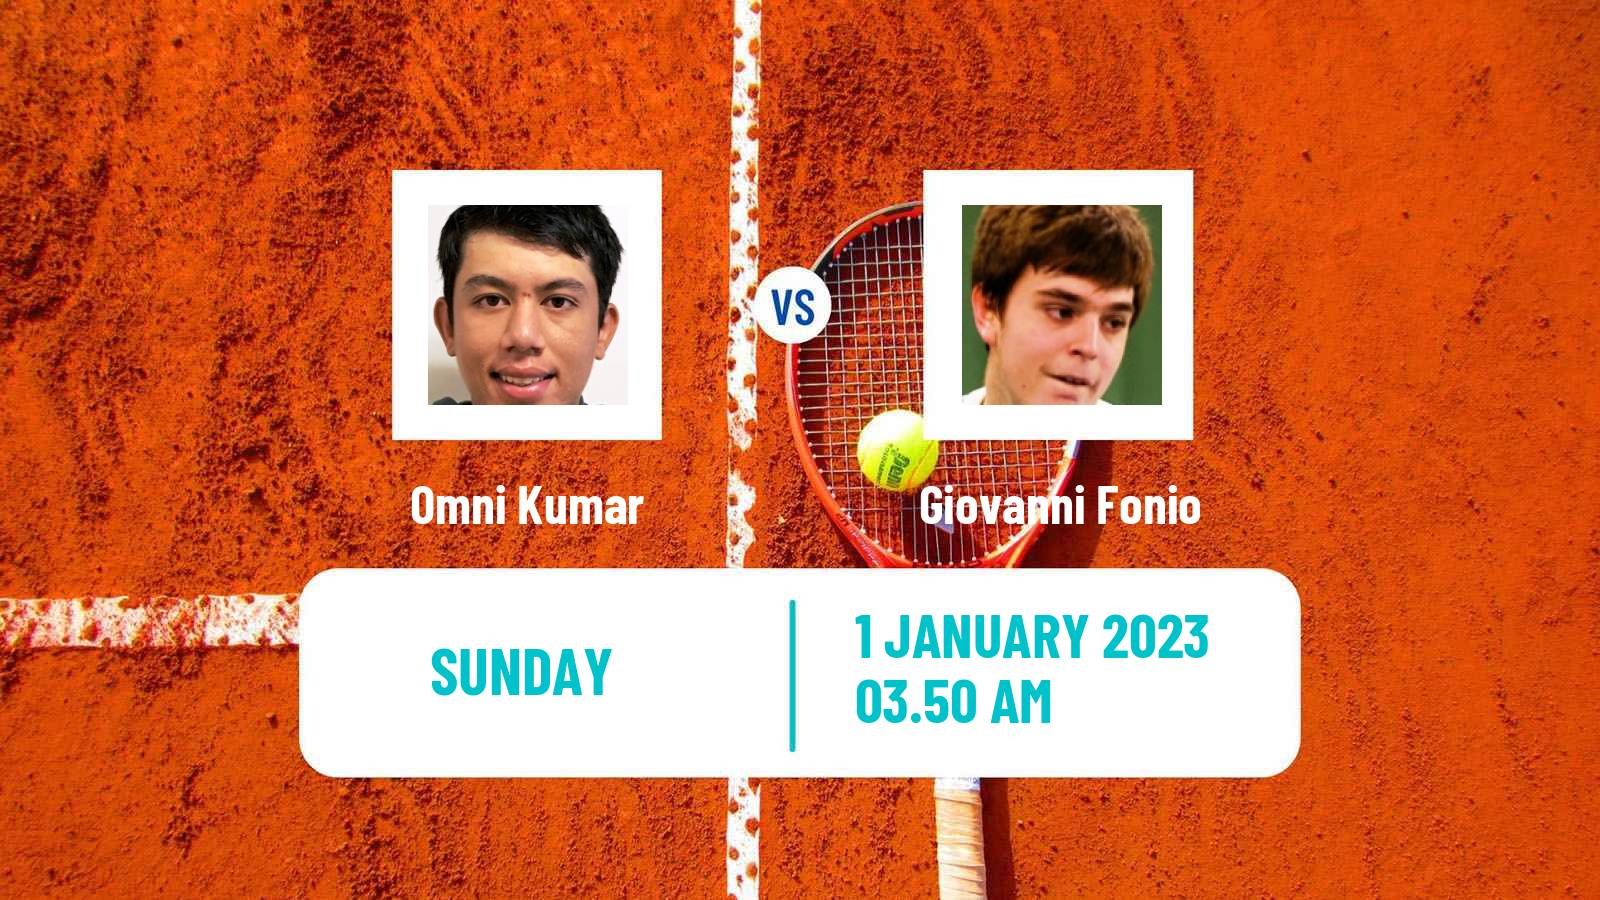 Tennis ATP Challenger Omni Kumar - Giovanni Fonio